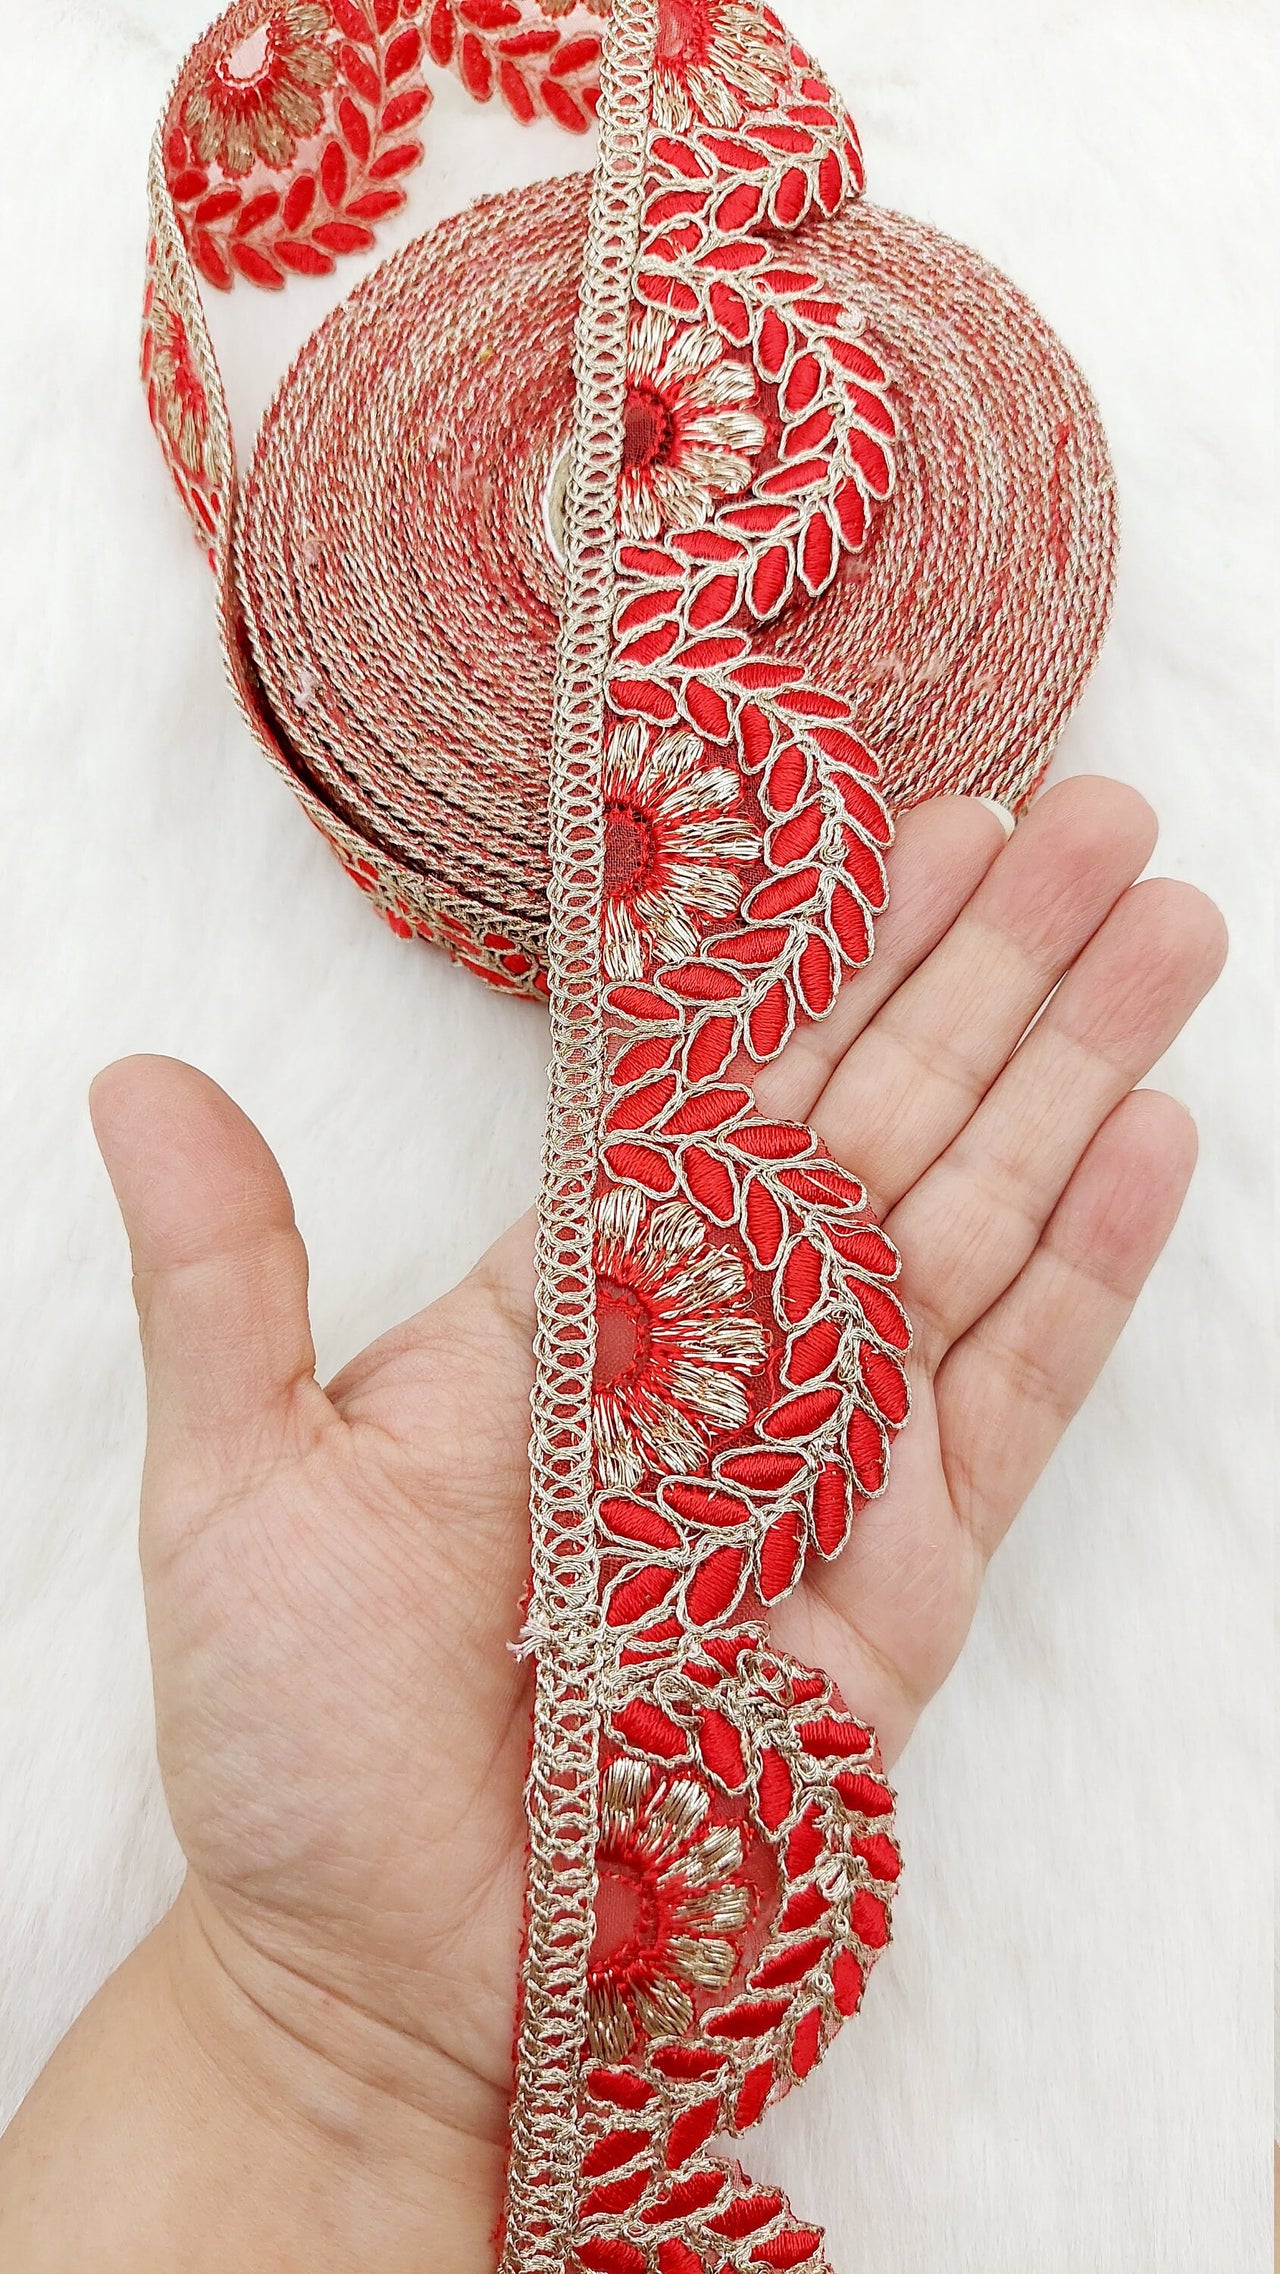 Embroidered Scallop Lace Trim, 9 Yards Trim Sewing Decorative Ribbon, Scallop Trim